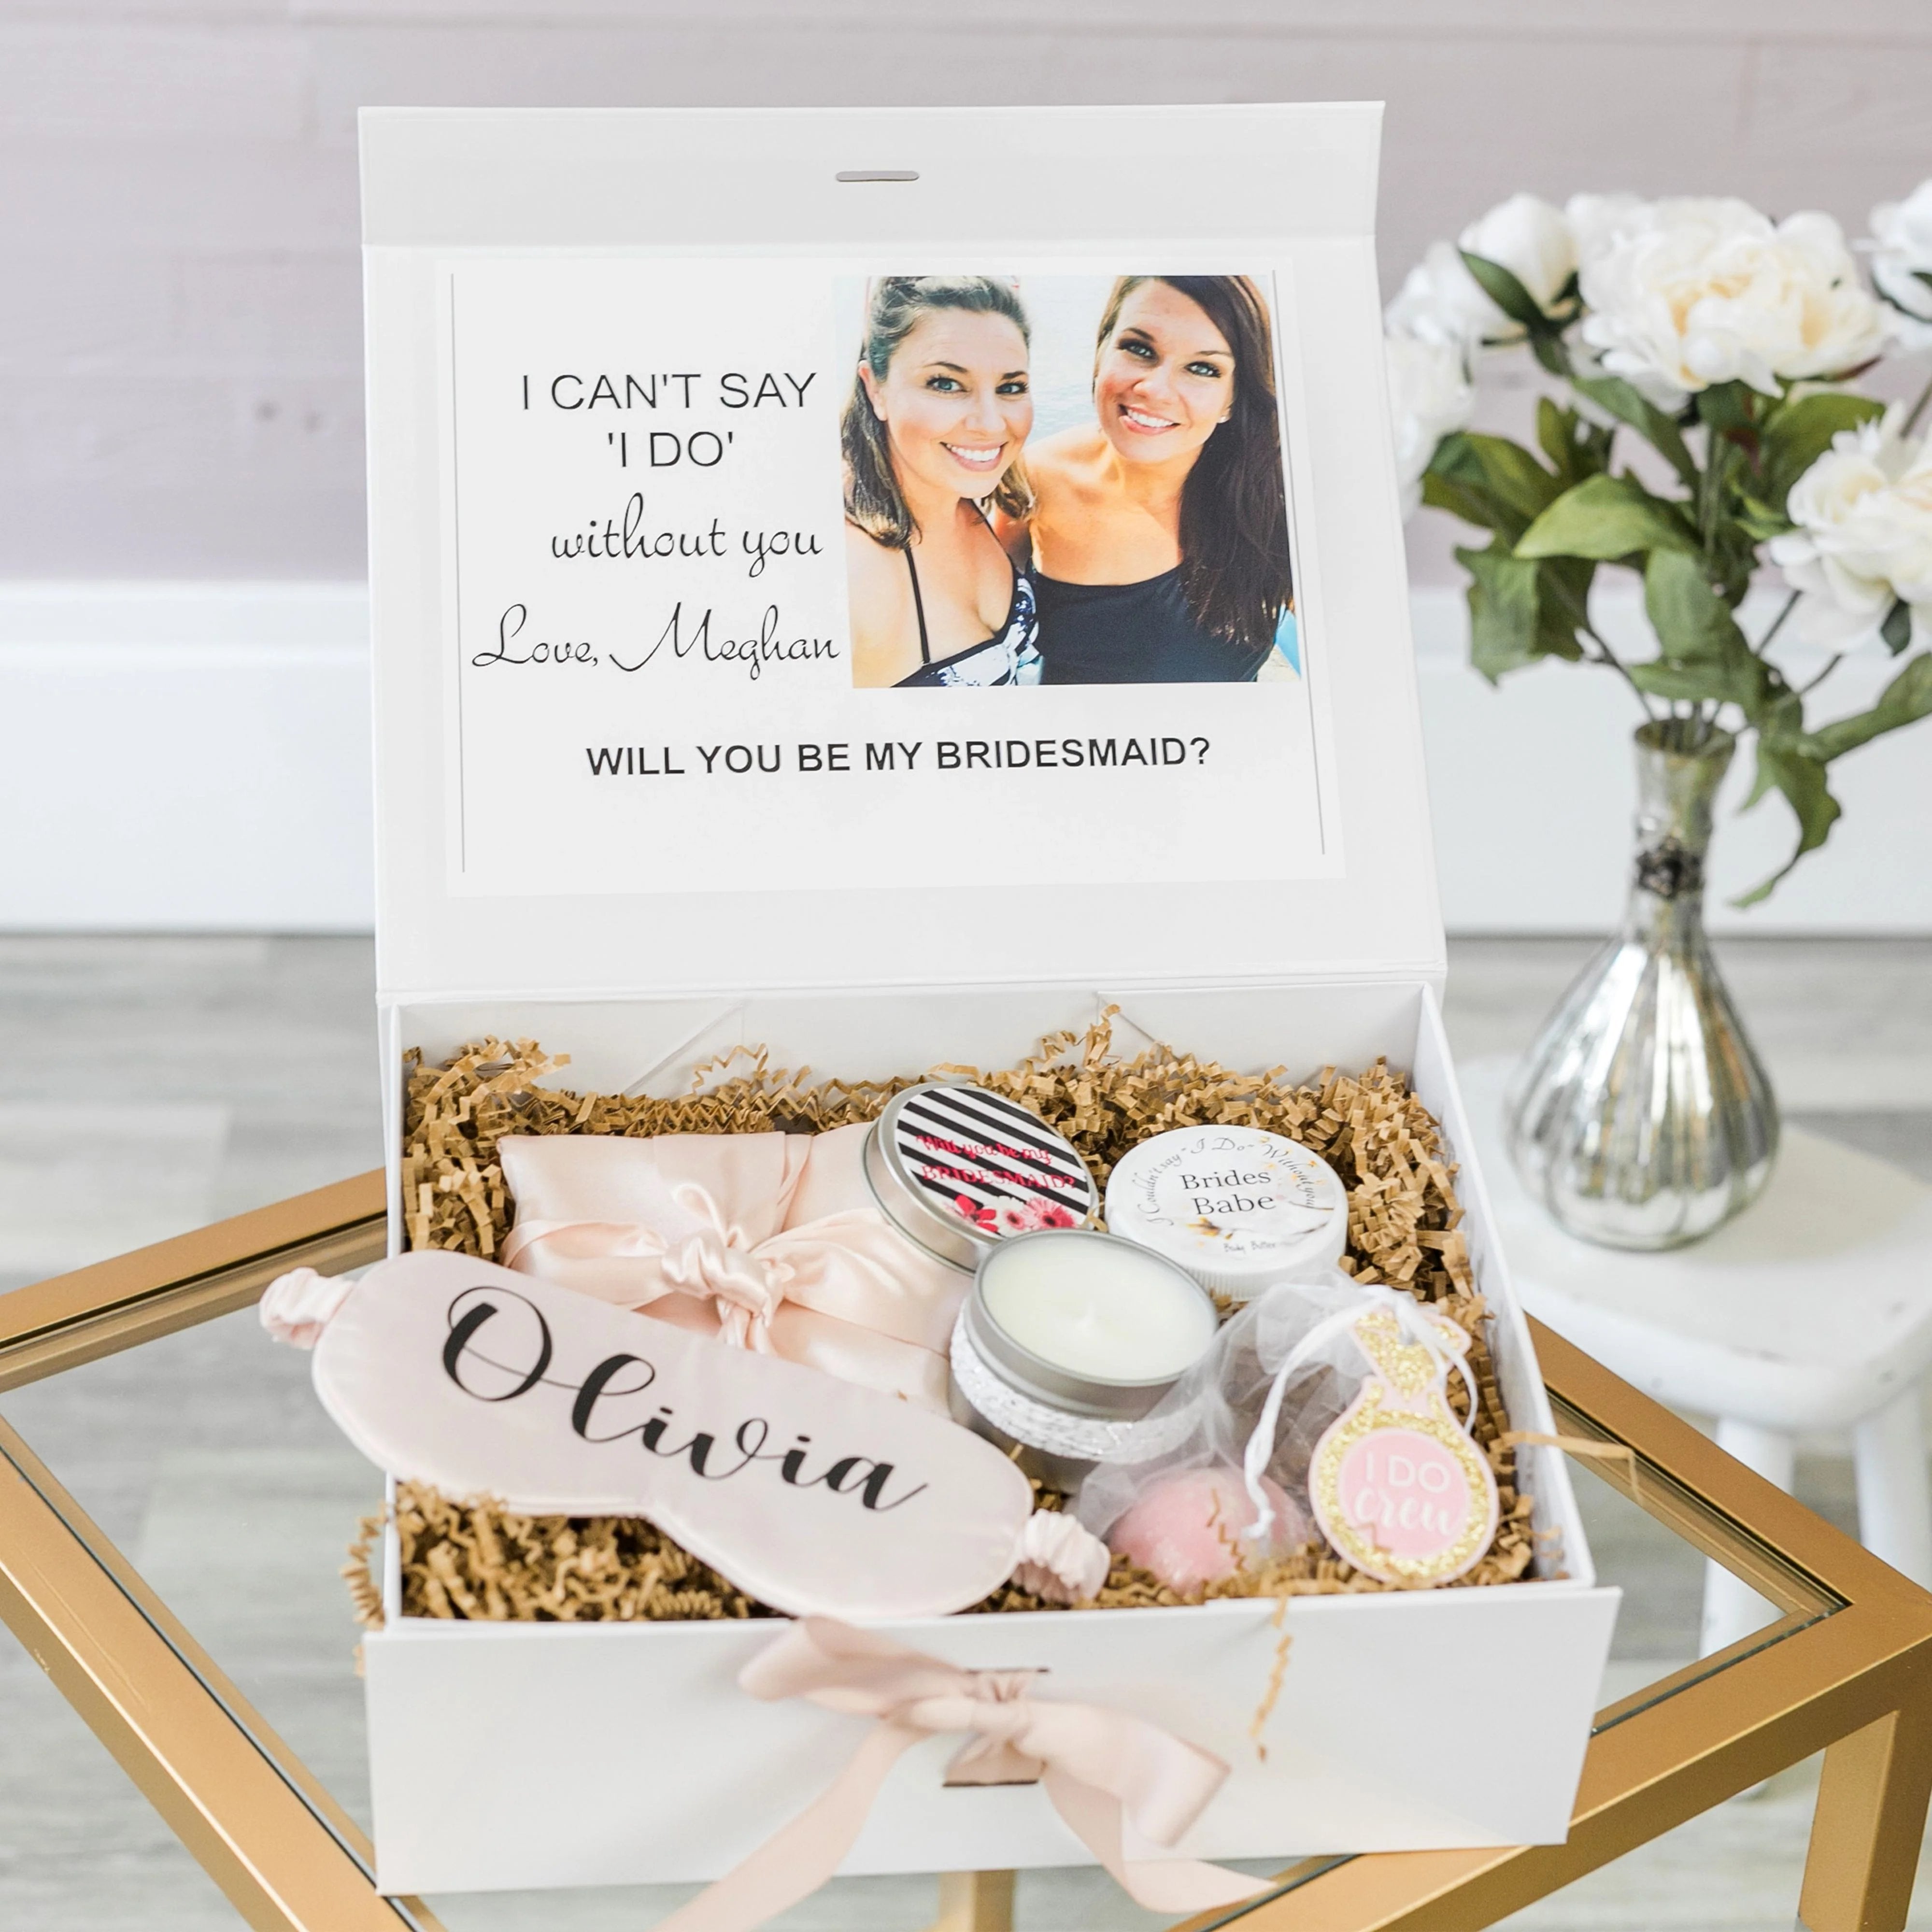 Kate Aspen Bride's Babe Bridesmaid Gift Box Kit | 00243NA